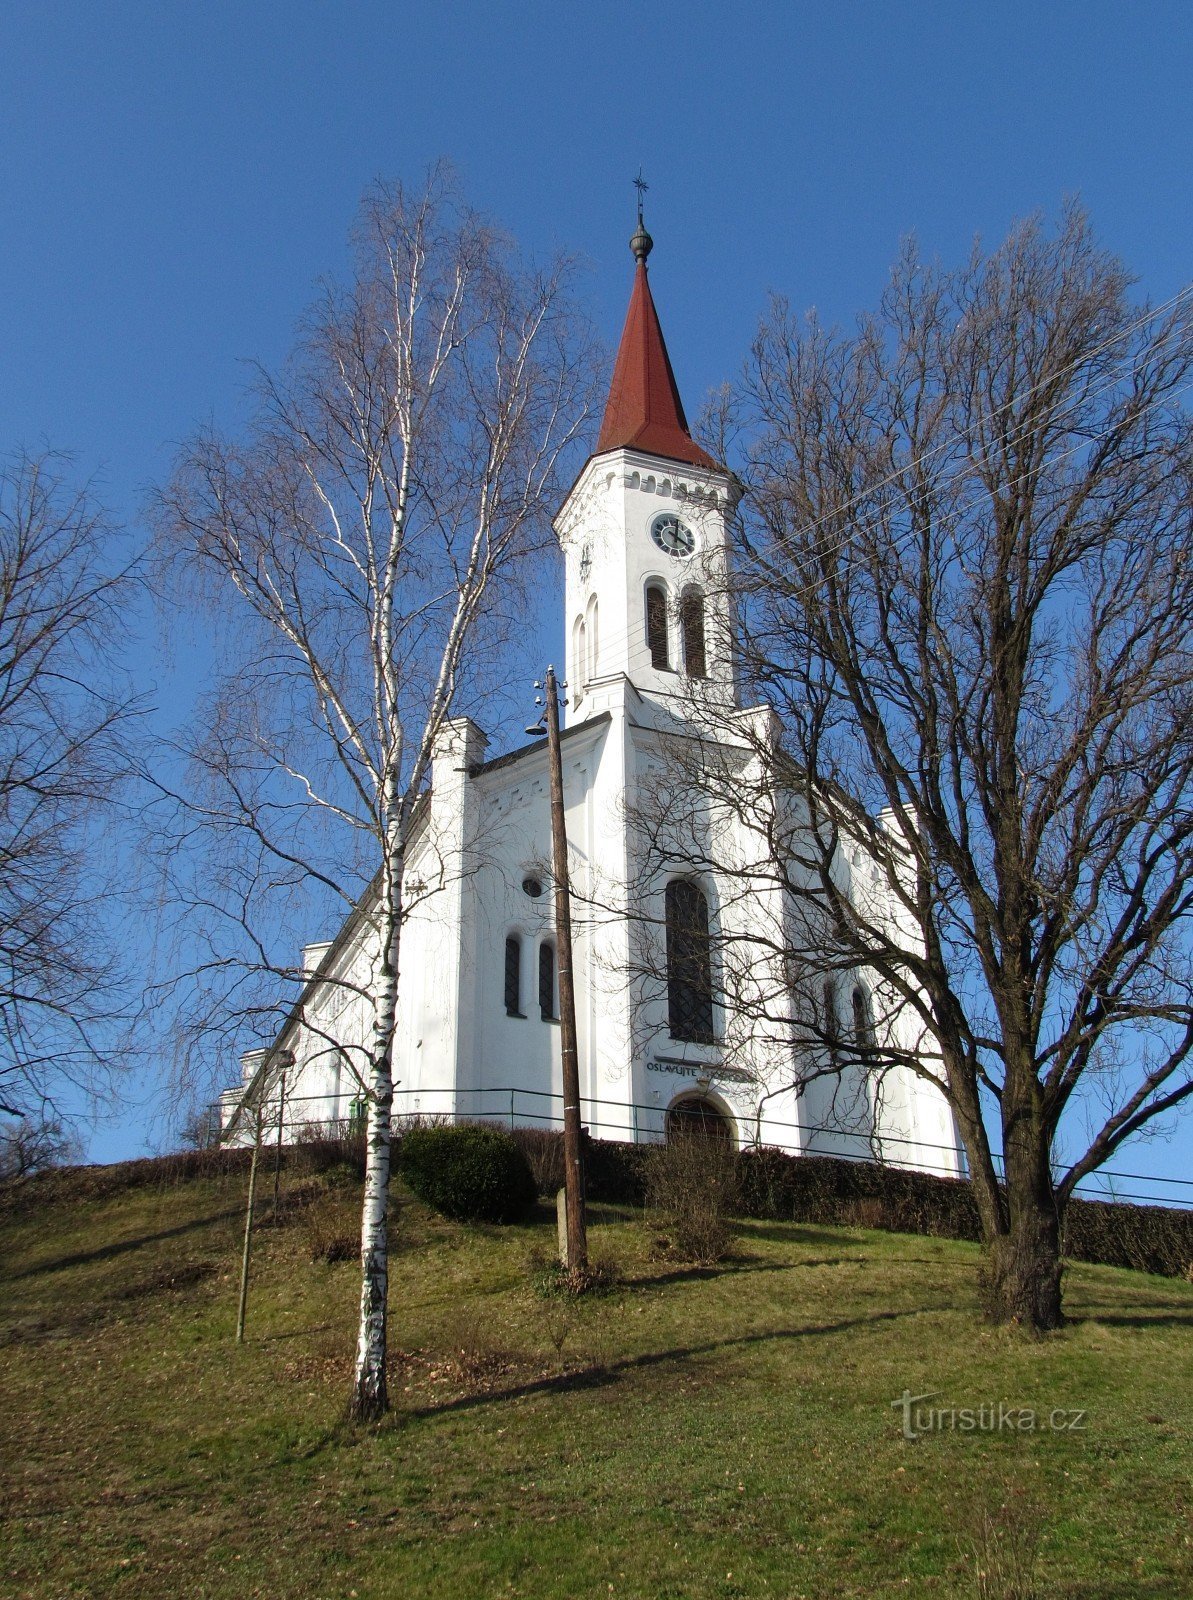 Zádverřice-Raková - євангельська церква